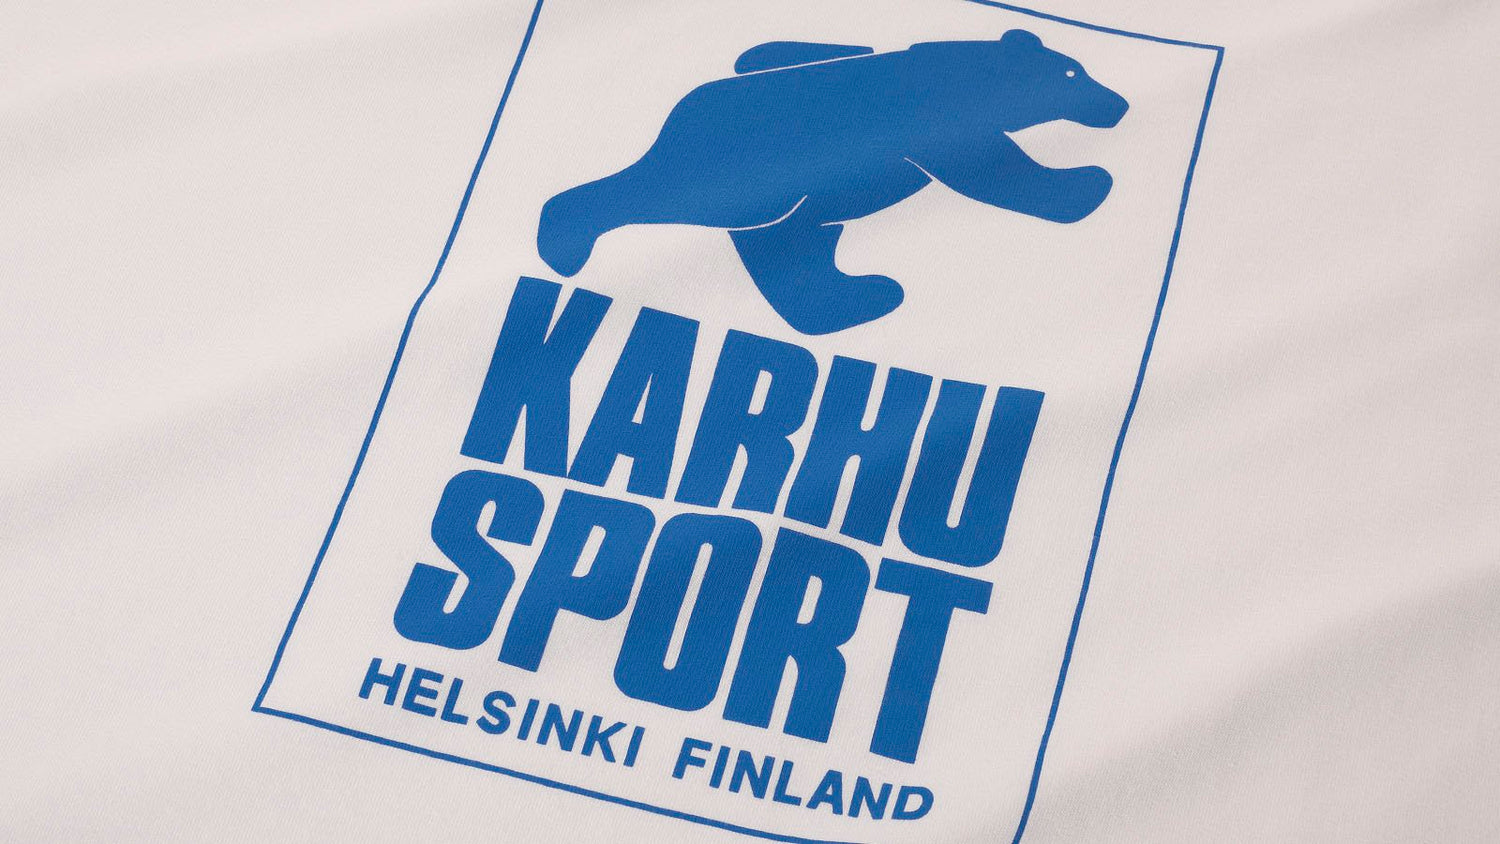 Karhu helsinki sports white royal blue logo close